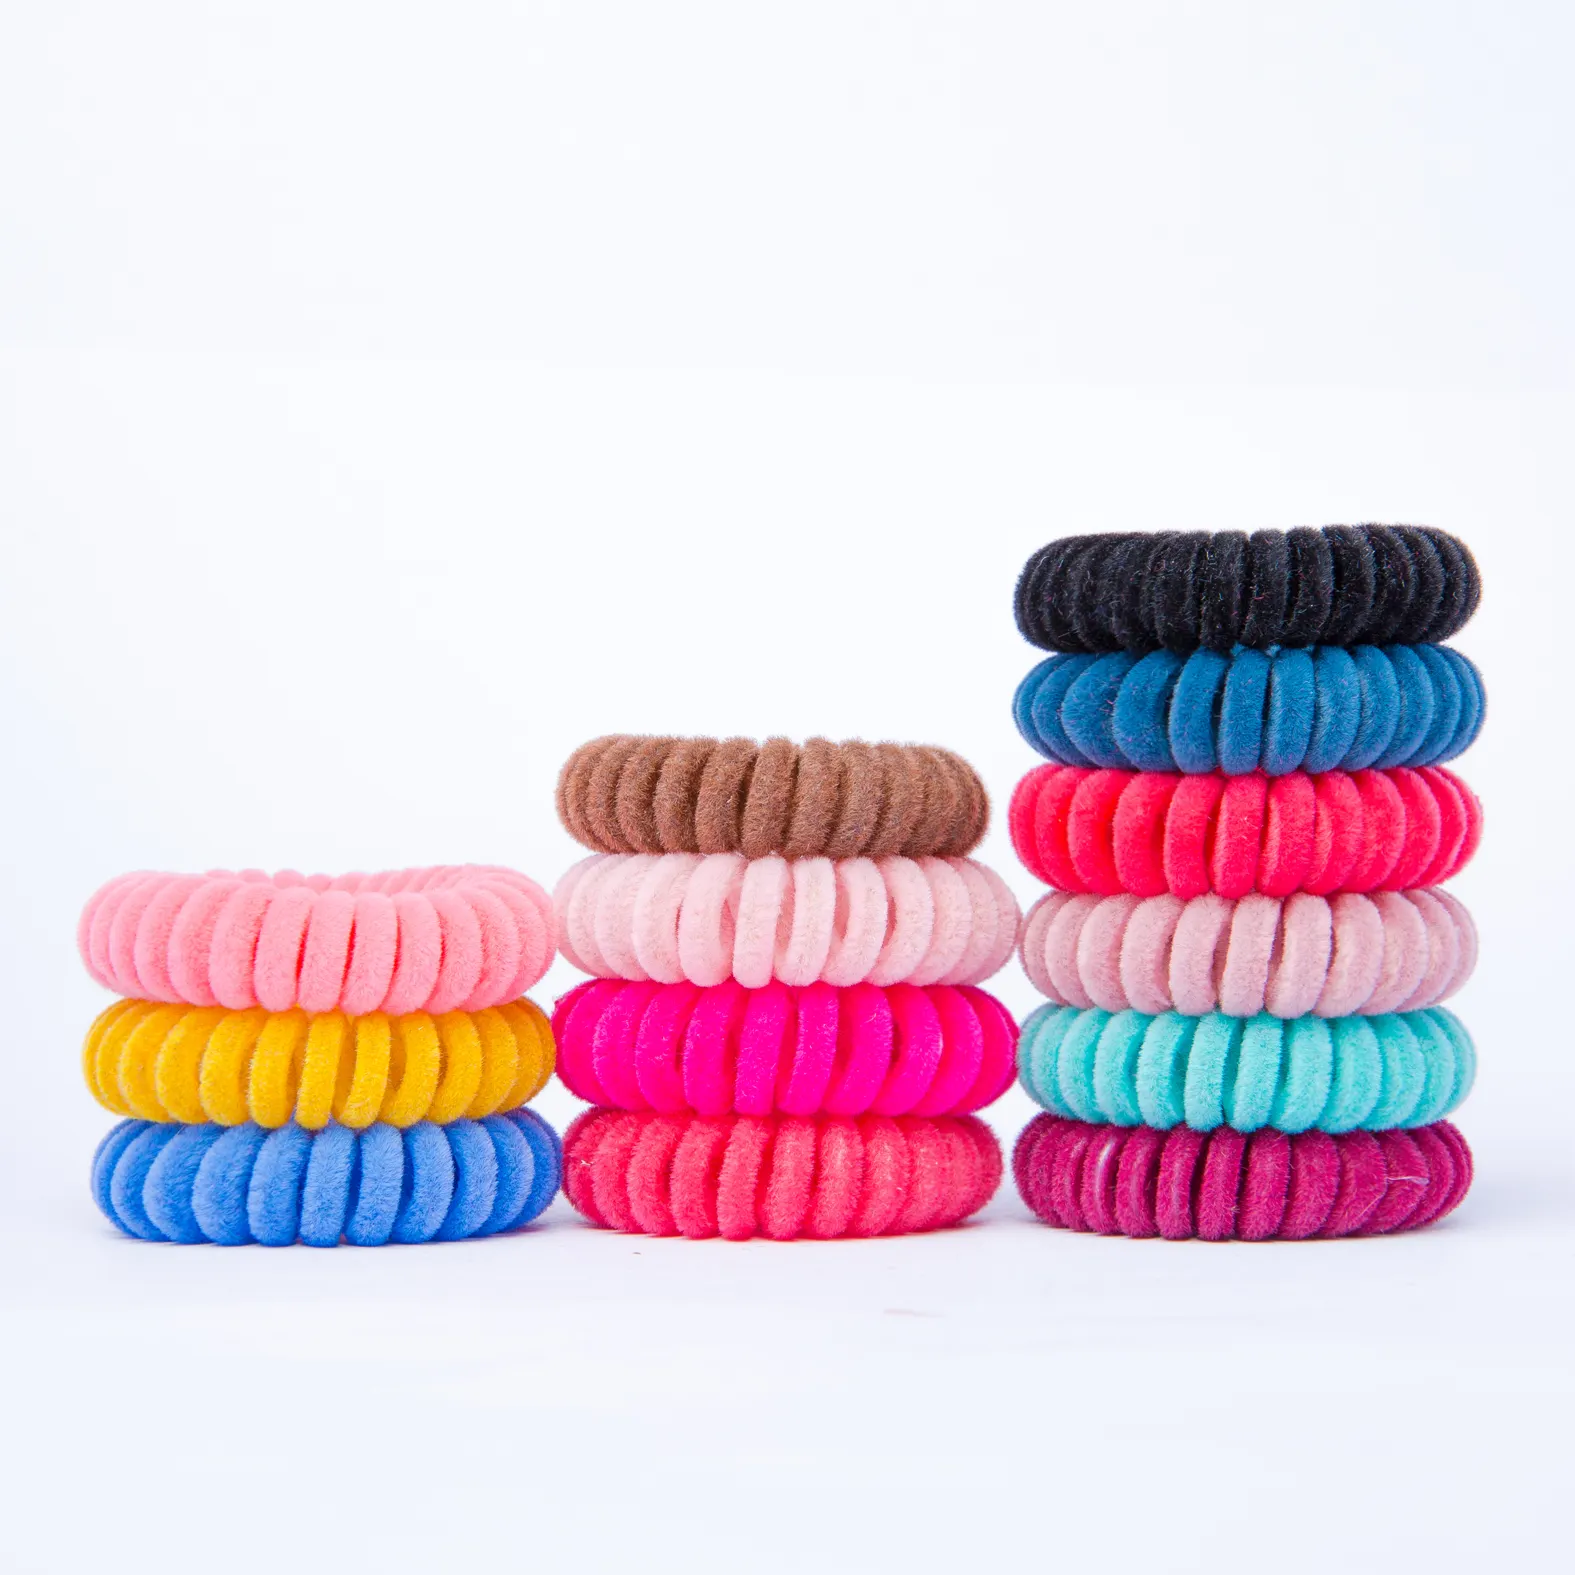 12pcs colorful Elastic Hair Bands Girls Hair Accessories Rubber Band Headwear women Gum Telephone Wire hair rope